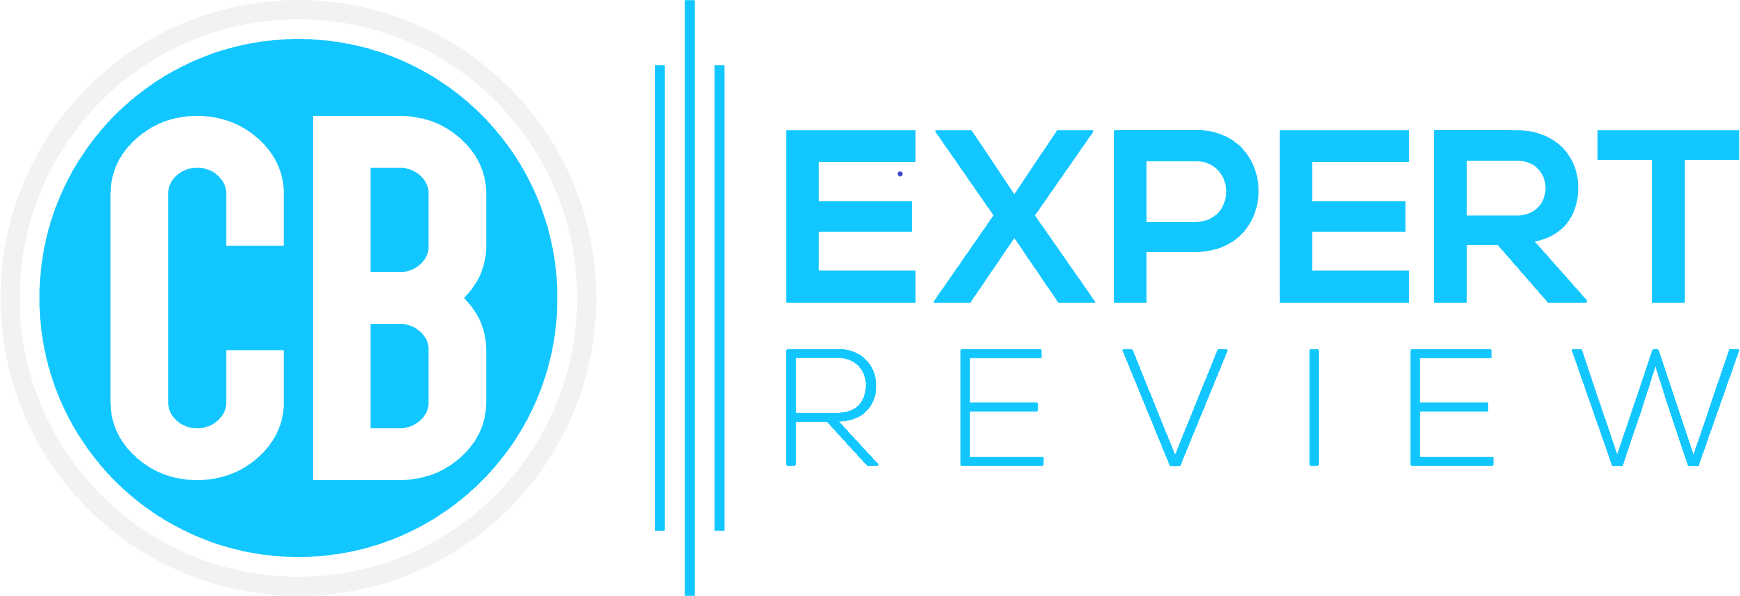 CB Expert Review